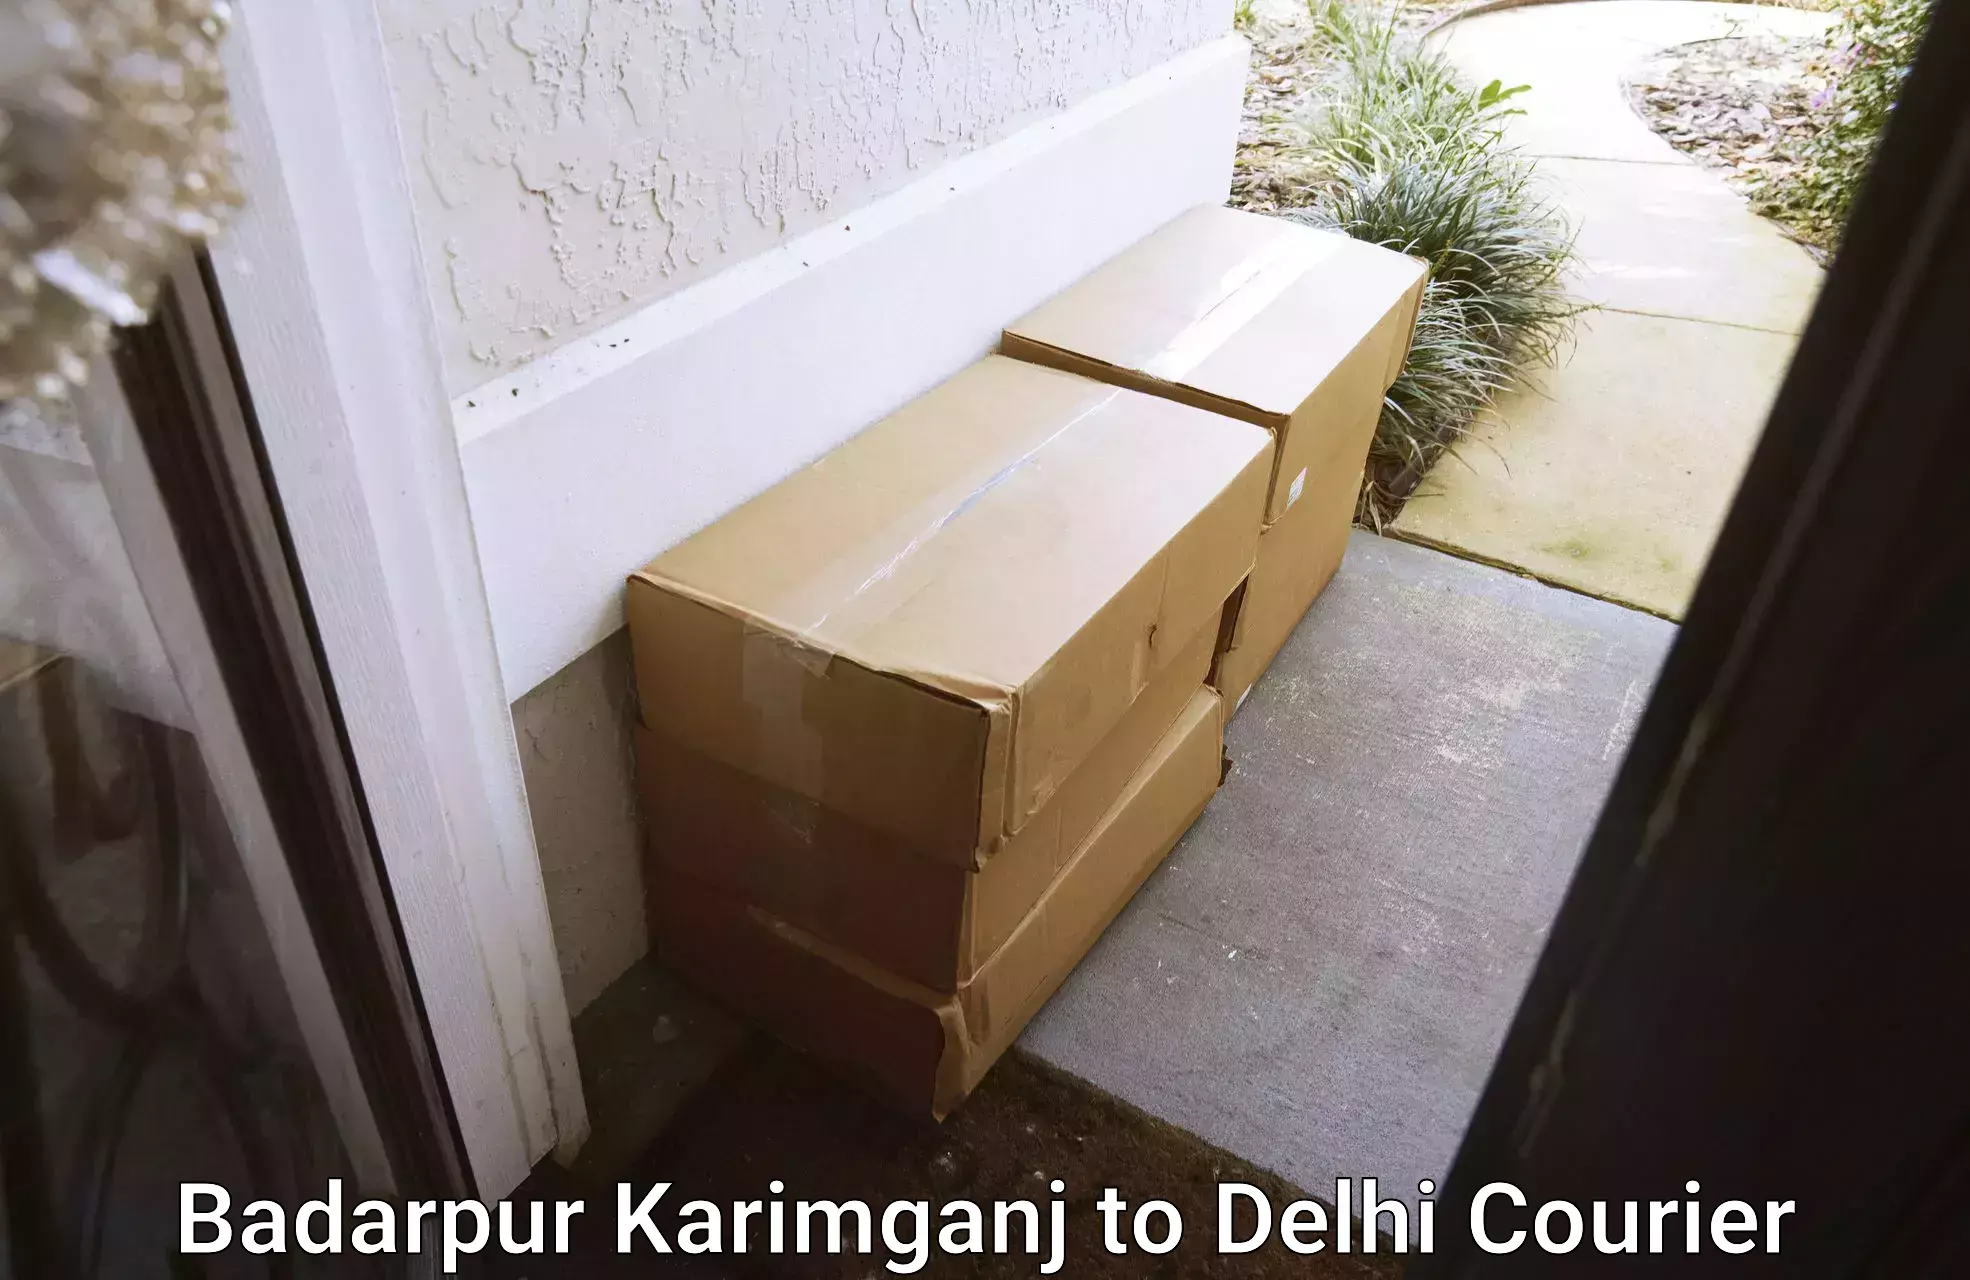 Cargo delivery service Badarpur Karimganj to NCR